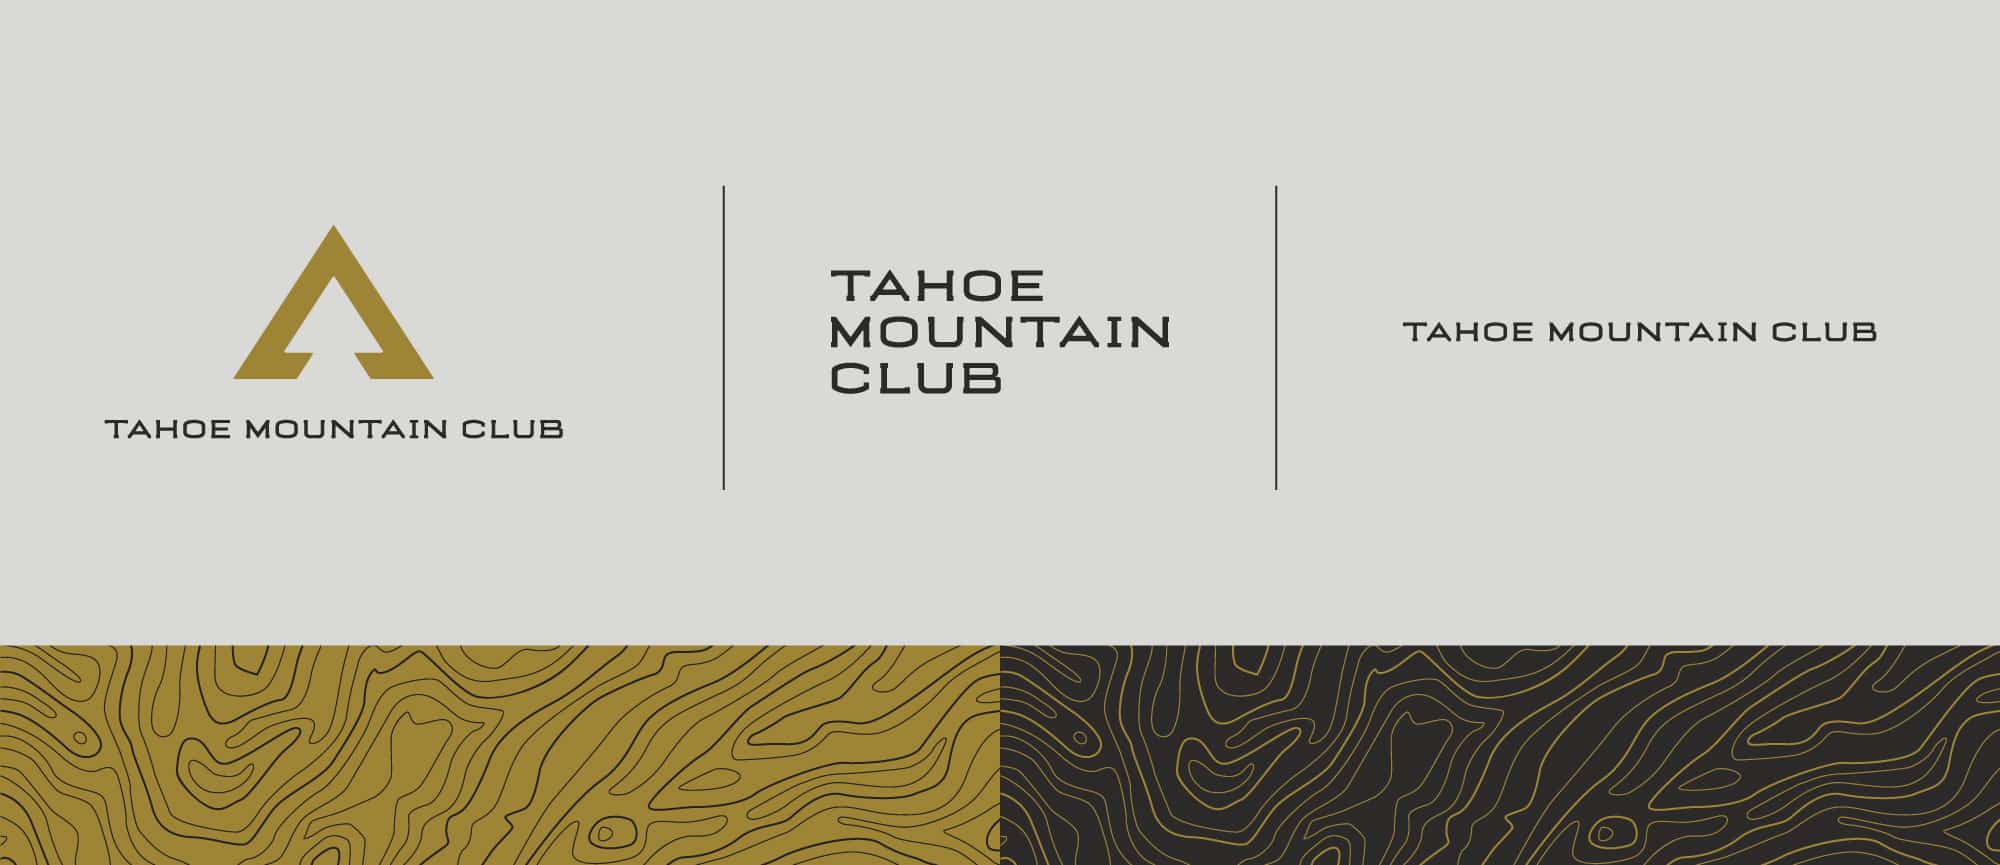 Tahoe Mountain Club visual identity